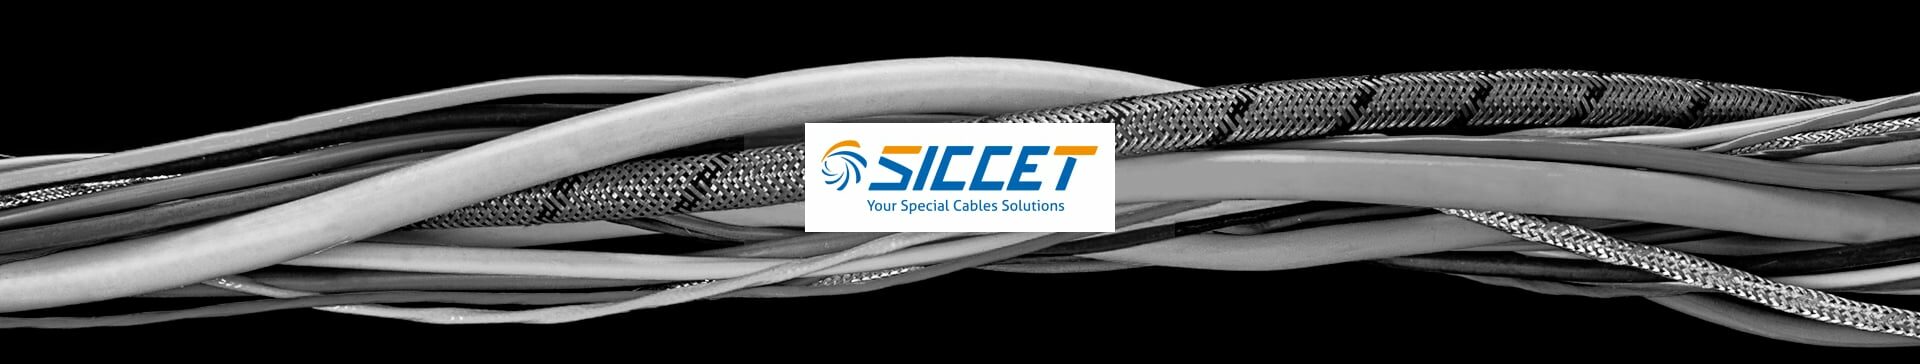 Logo Siccet kamet trading.com